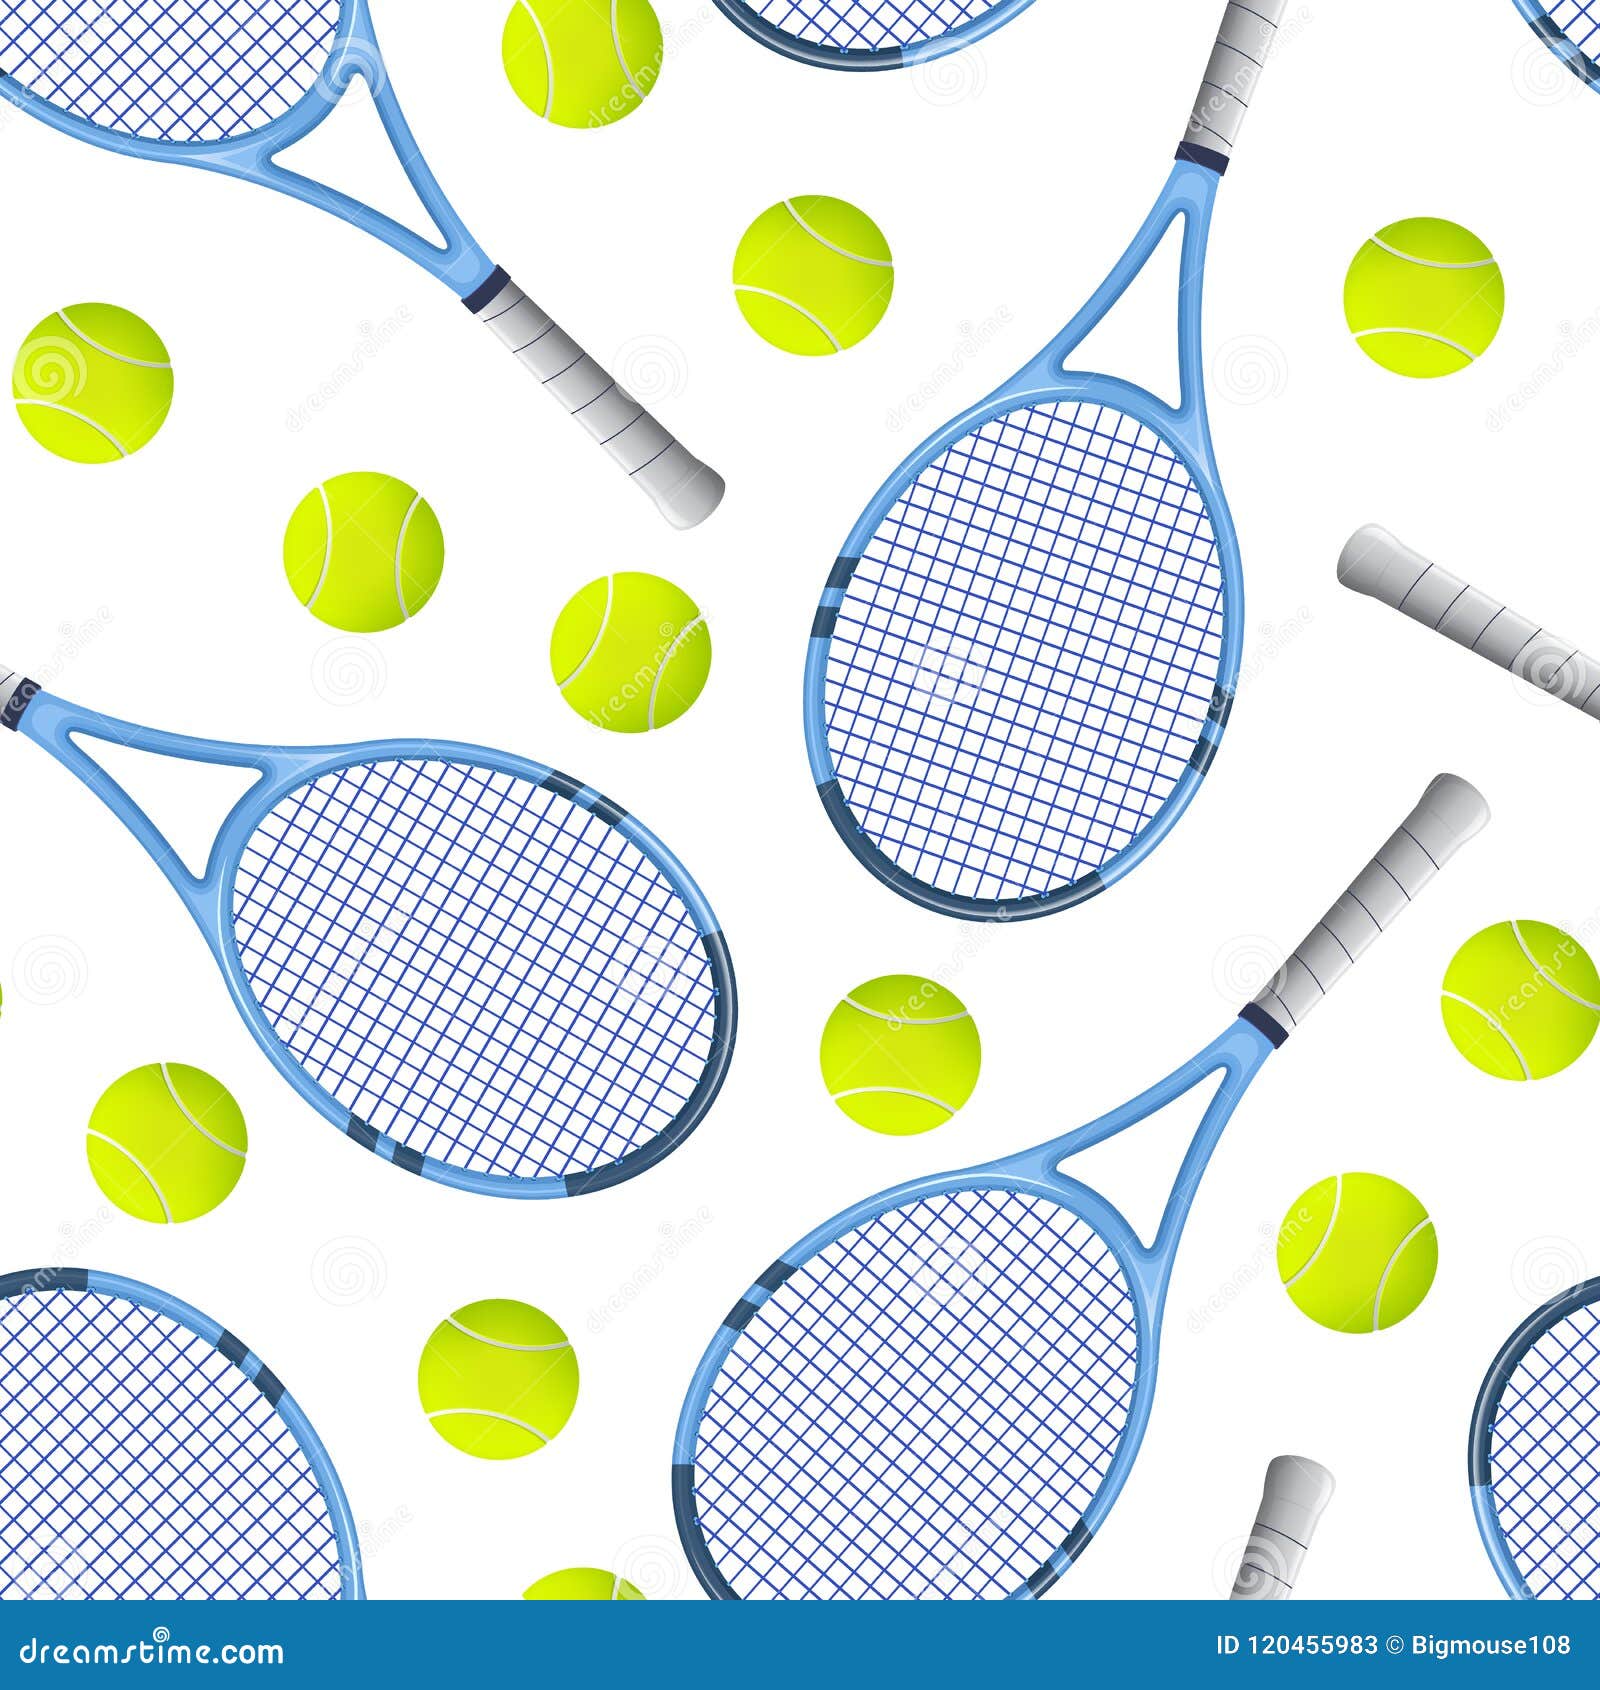 Tennis Balls Pictures  Download Free Images on Unsplash